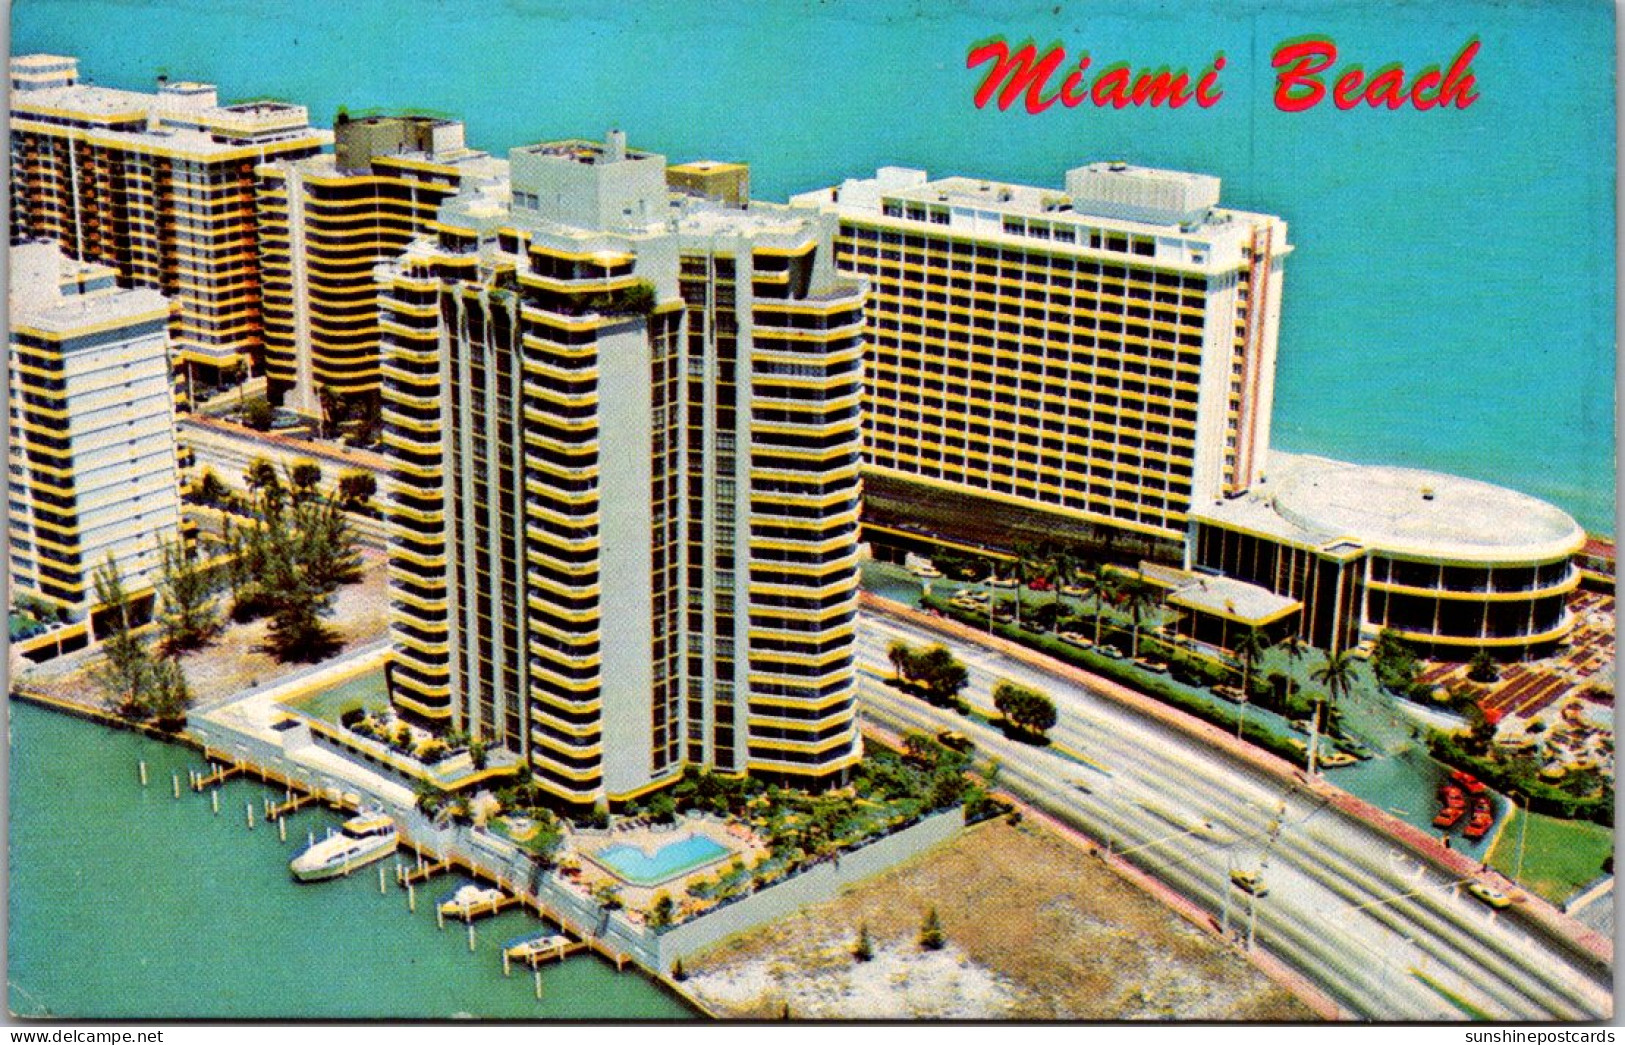 Florida Miami Beach Hotels And Apartments Along Collins Avenue - Miami Beach